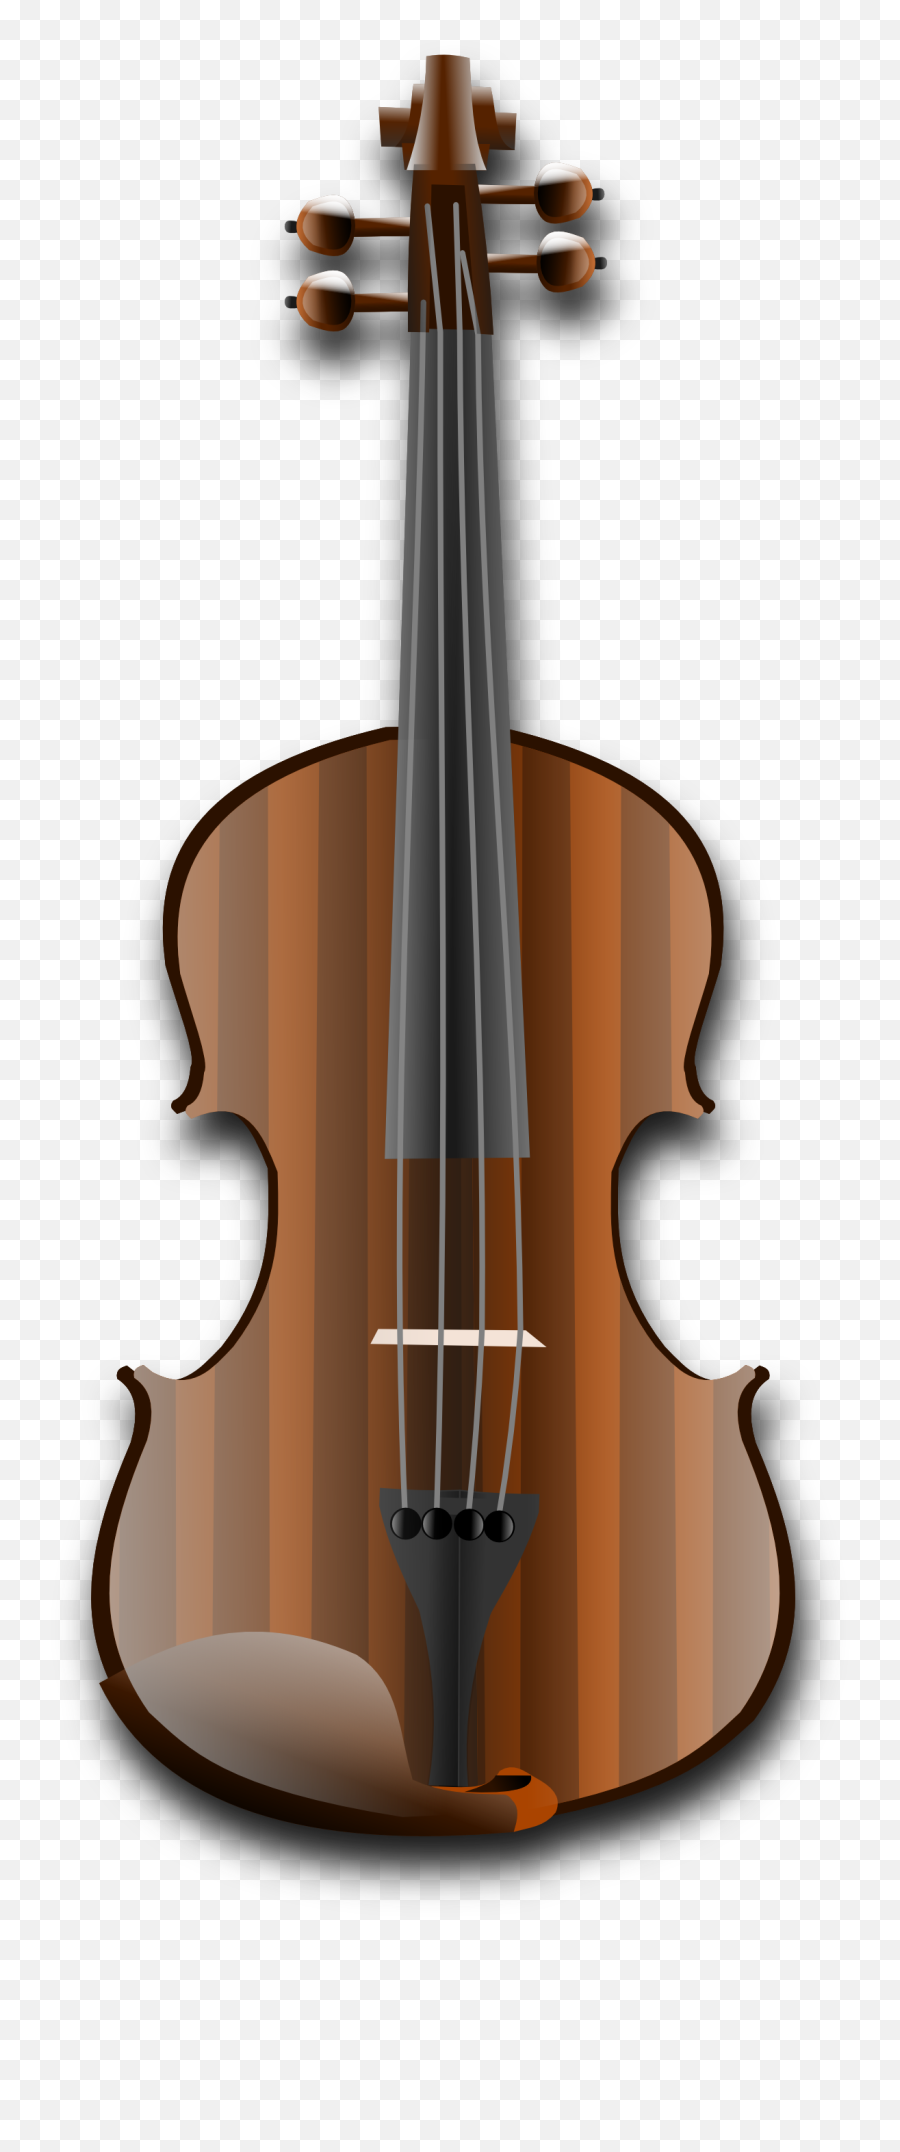 Playing Violin Clipart Images Guru - Violin Public Domain Emoji,Violin Clipart